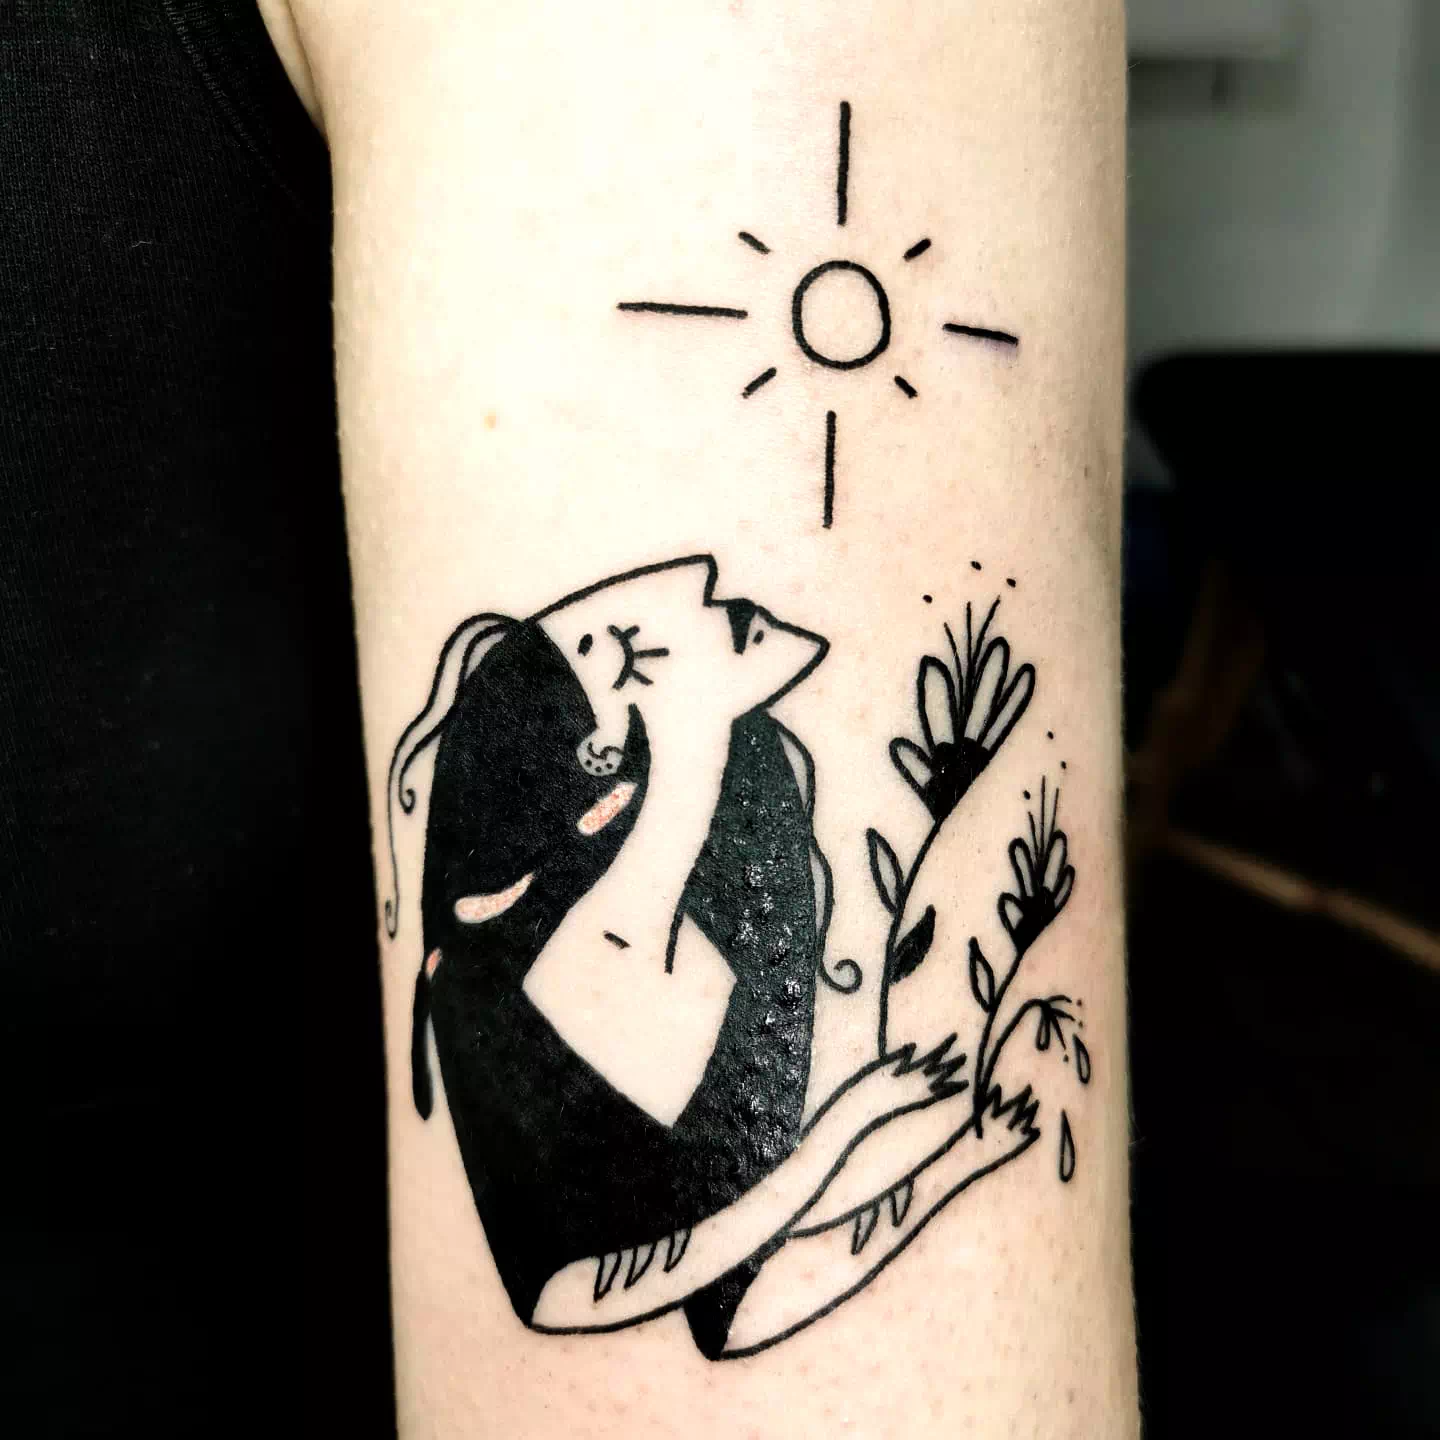 Black Ink Depression Tattoo Woman With Umbrella